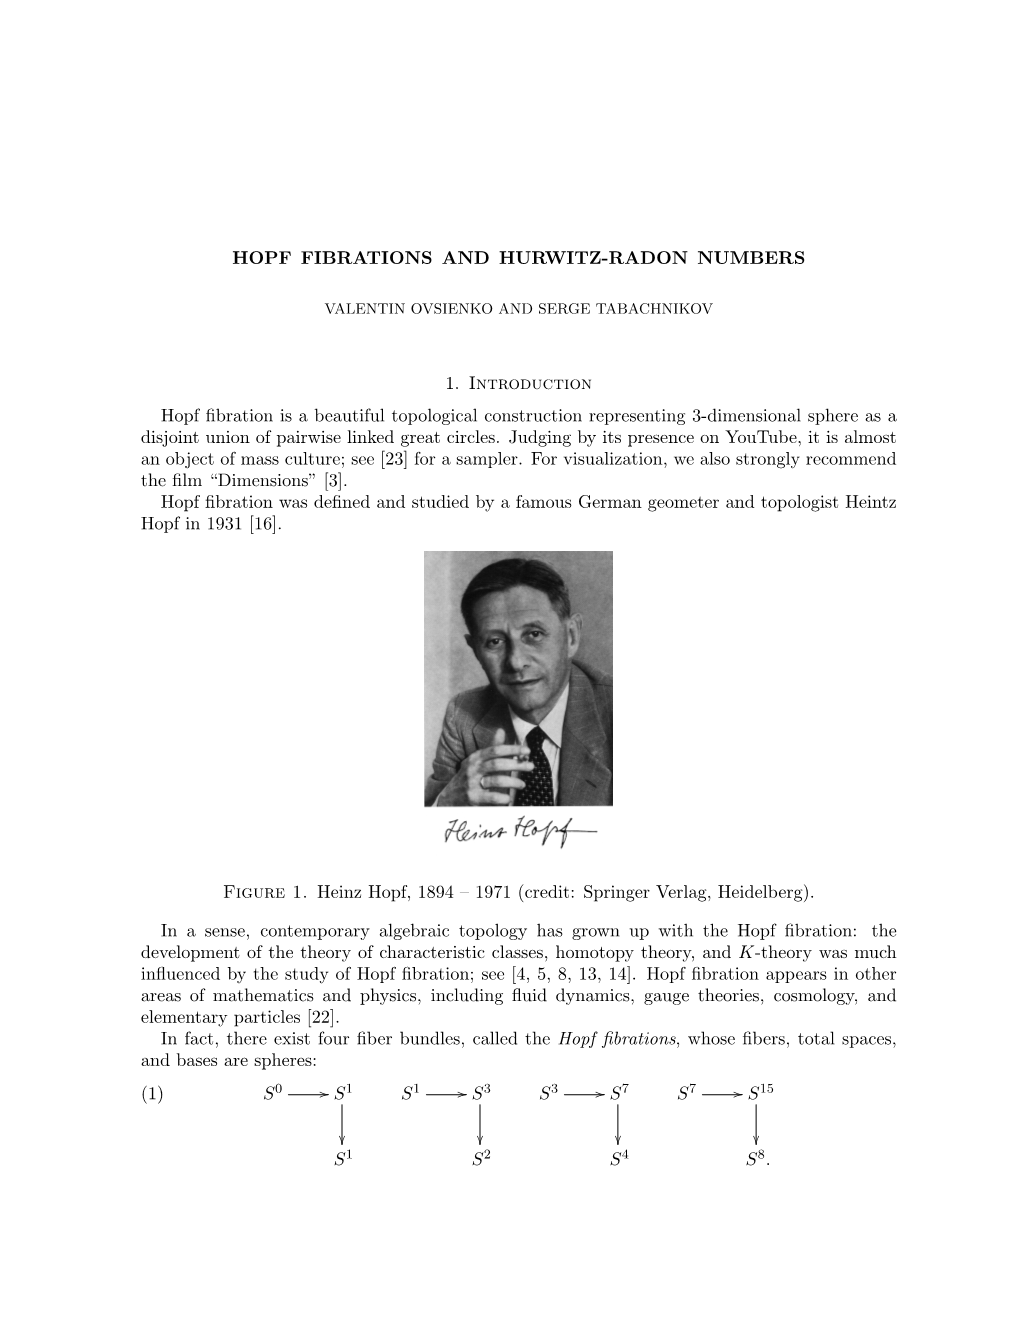 Hopf Fibrations and Hurwitz-Radon Numbers, with V. Ovsienko